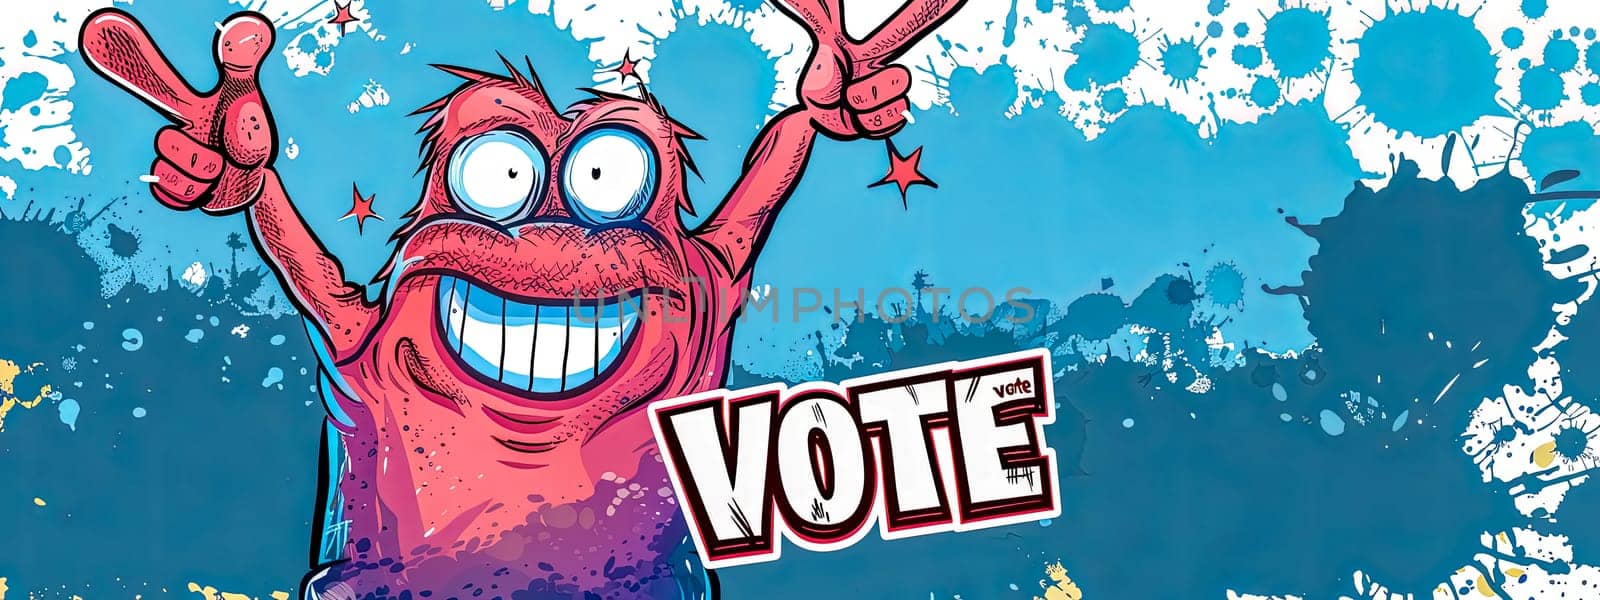 Vibrant cartoon monster promoting voting by Edophoto